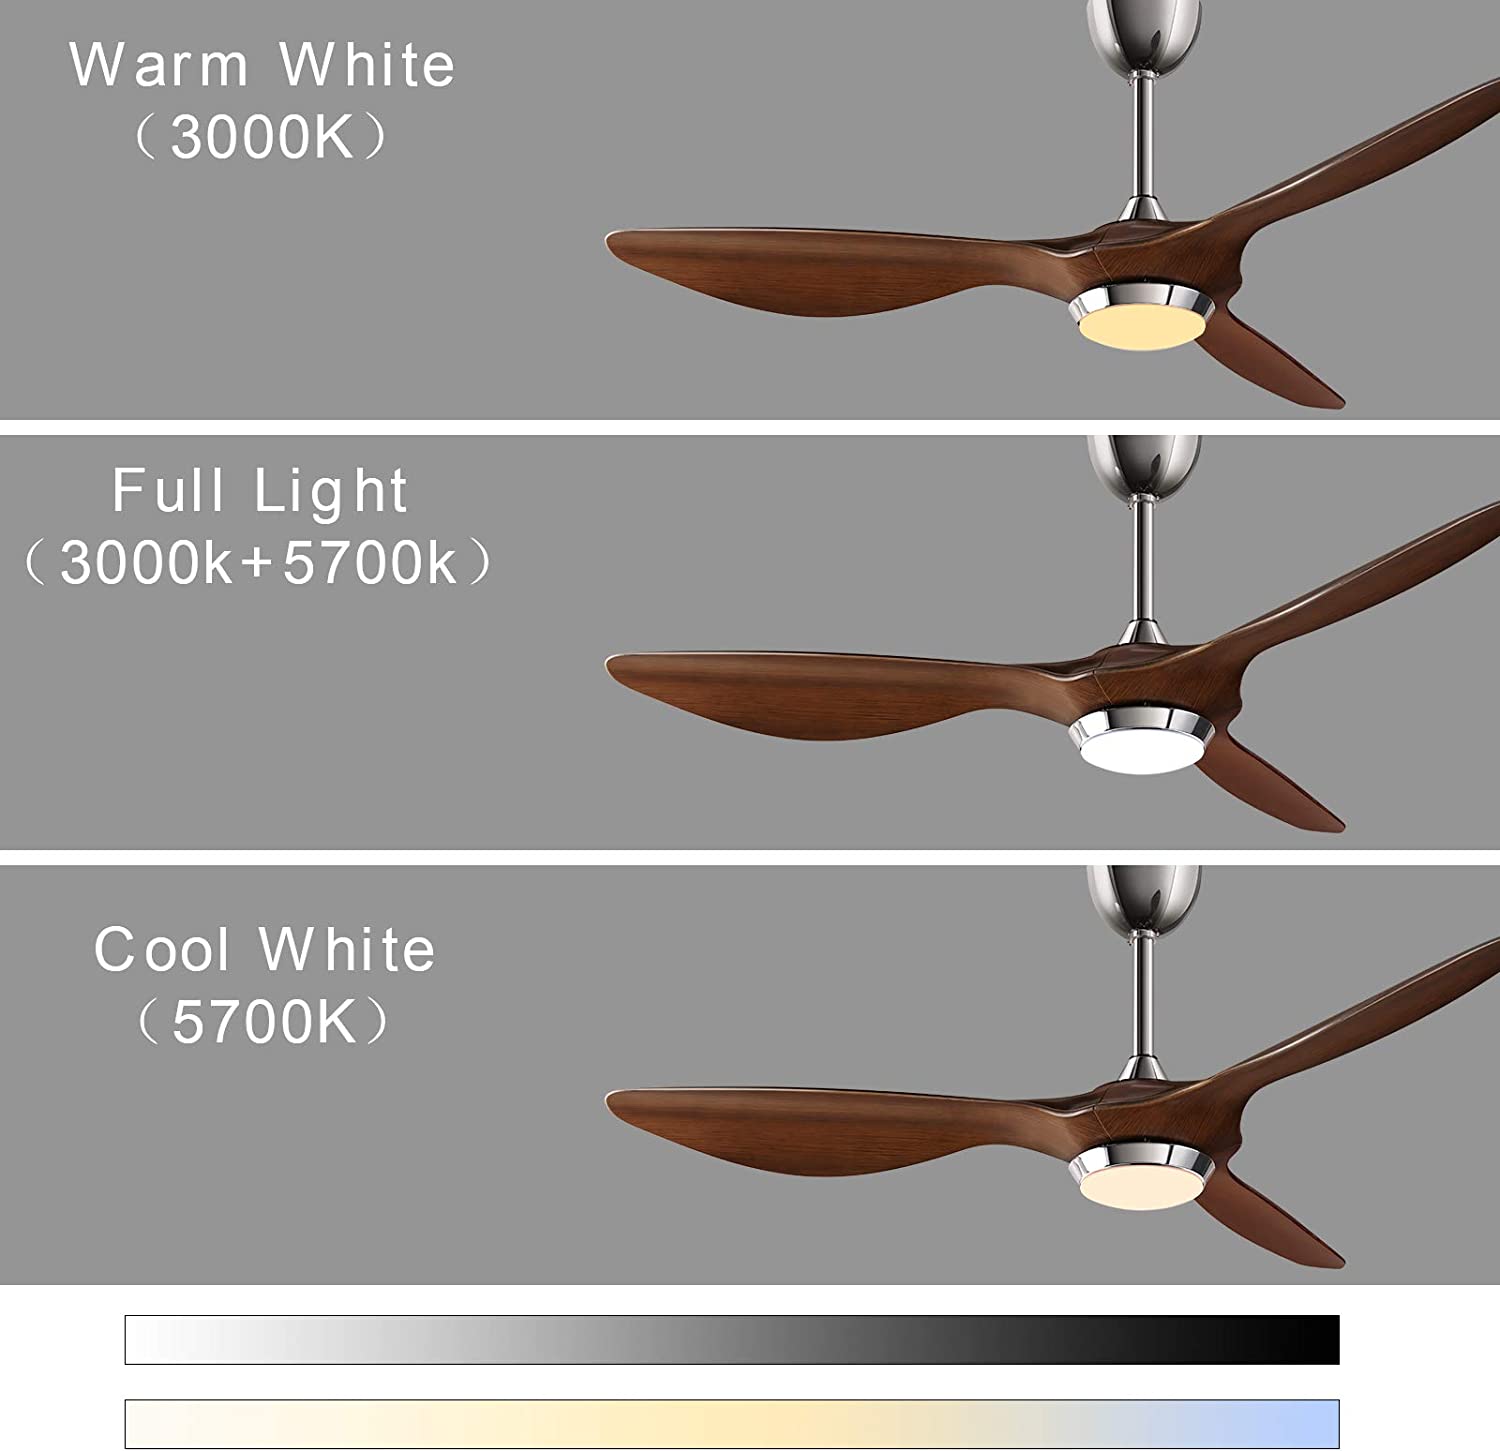 پنکه سقفی reiga 52-in Ceiling Fan with LED Light - ارسال ۱۰ الی ۱۵ روز کاری